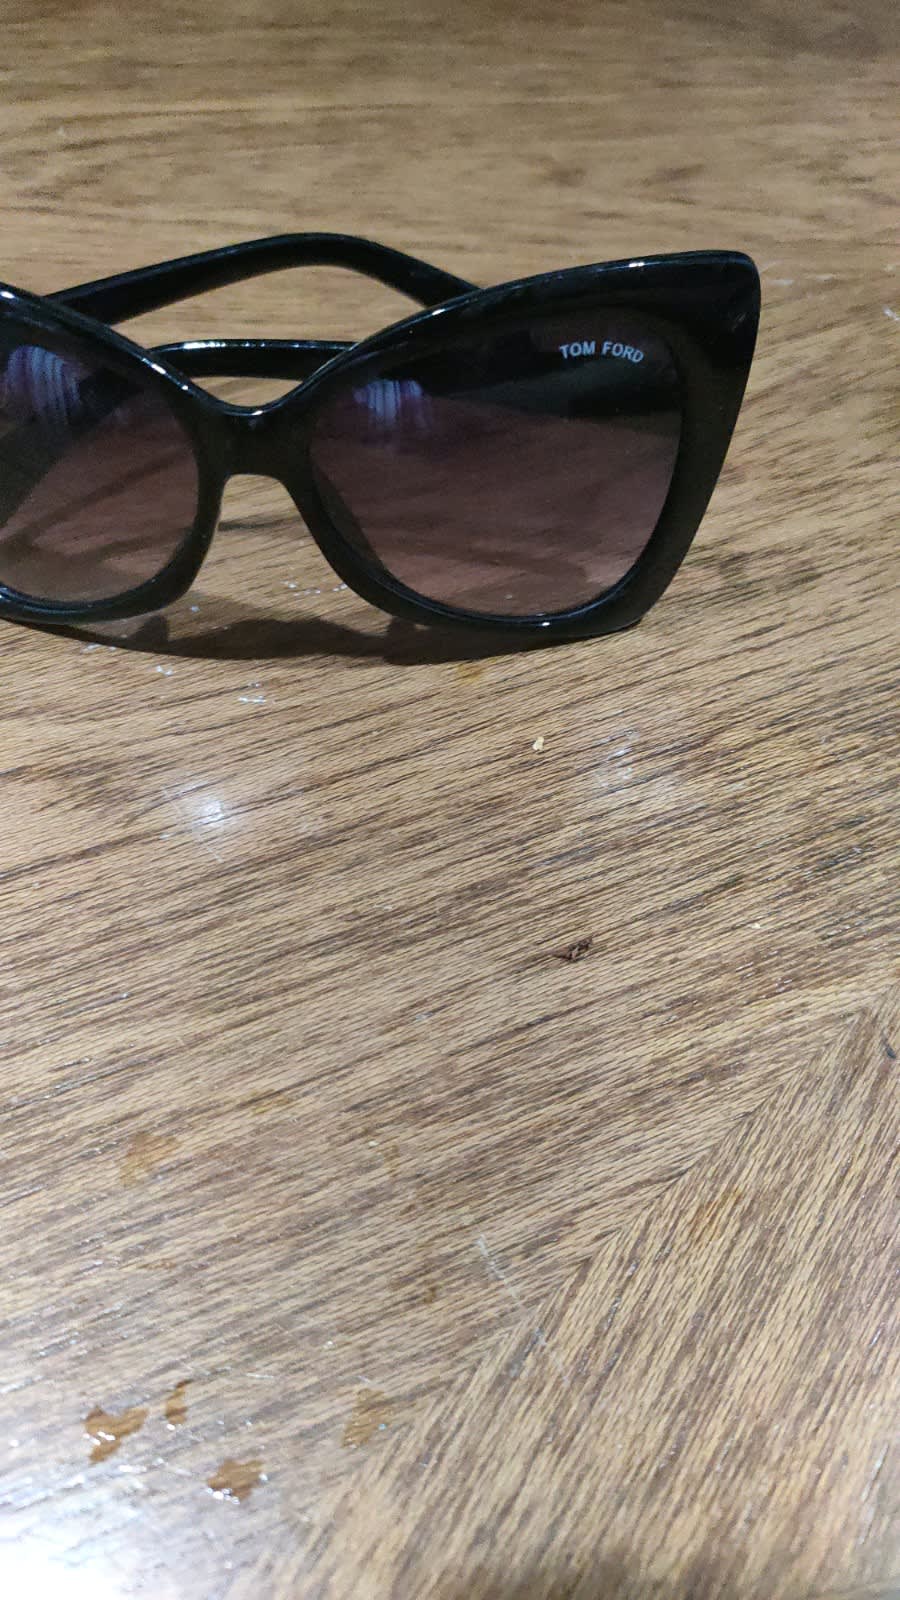 tom ford sunglasses in Melbourne Region, VIC | Accessories | Gumtree  Australia Free Local Classifieds